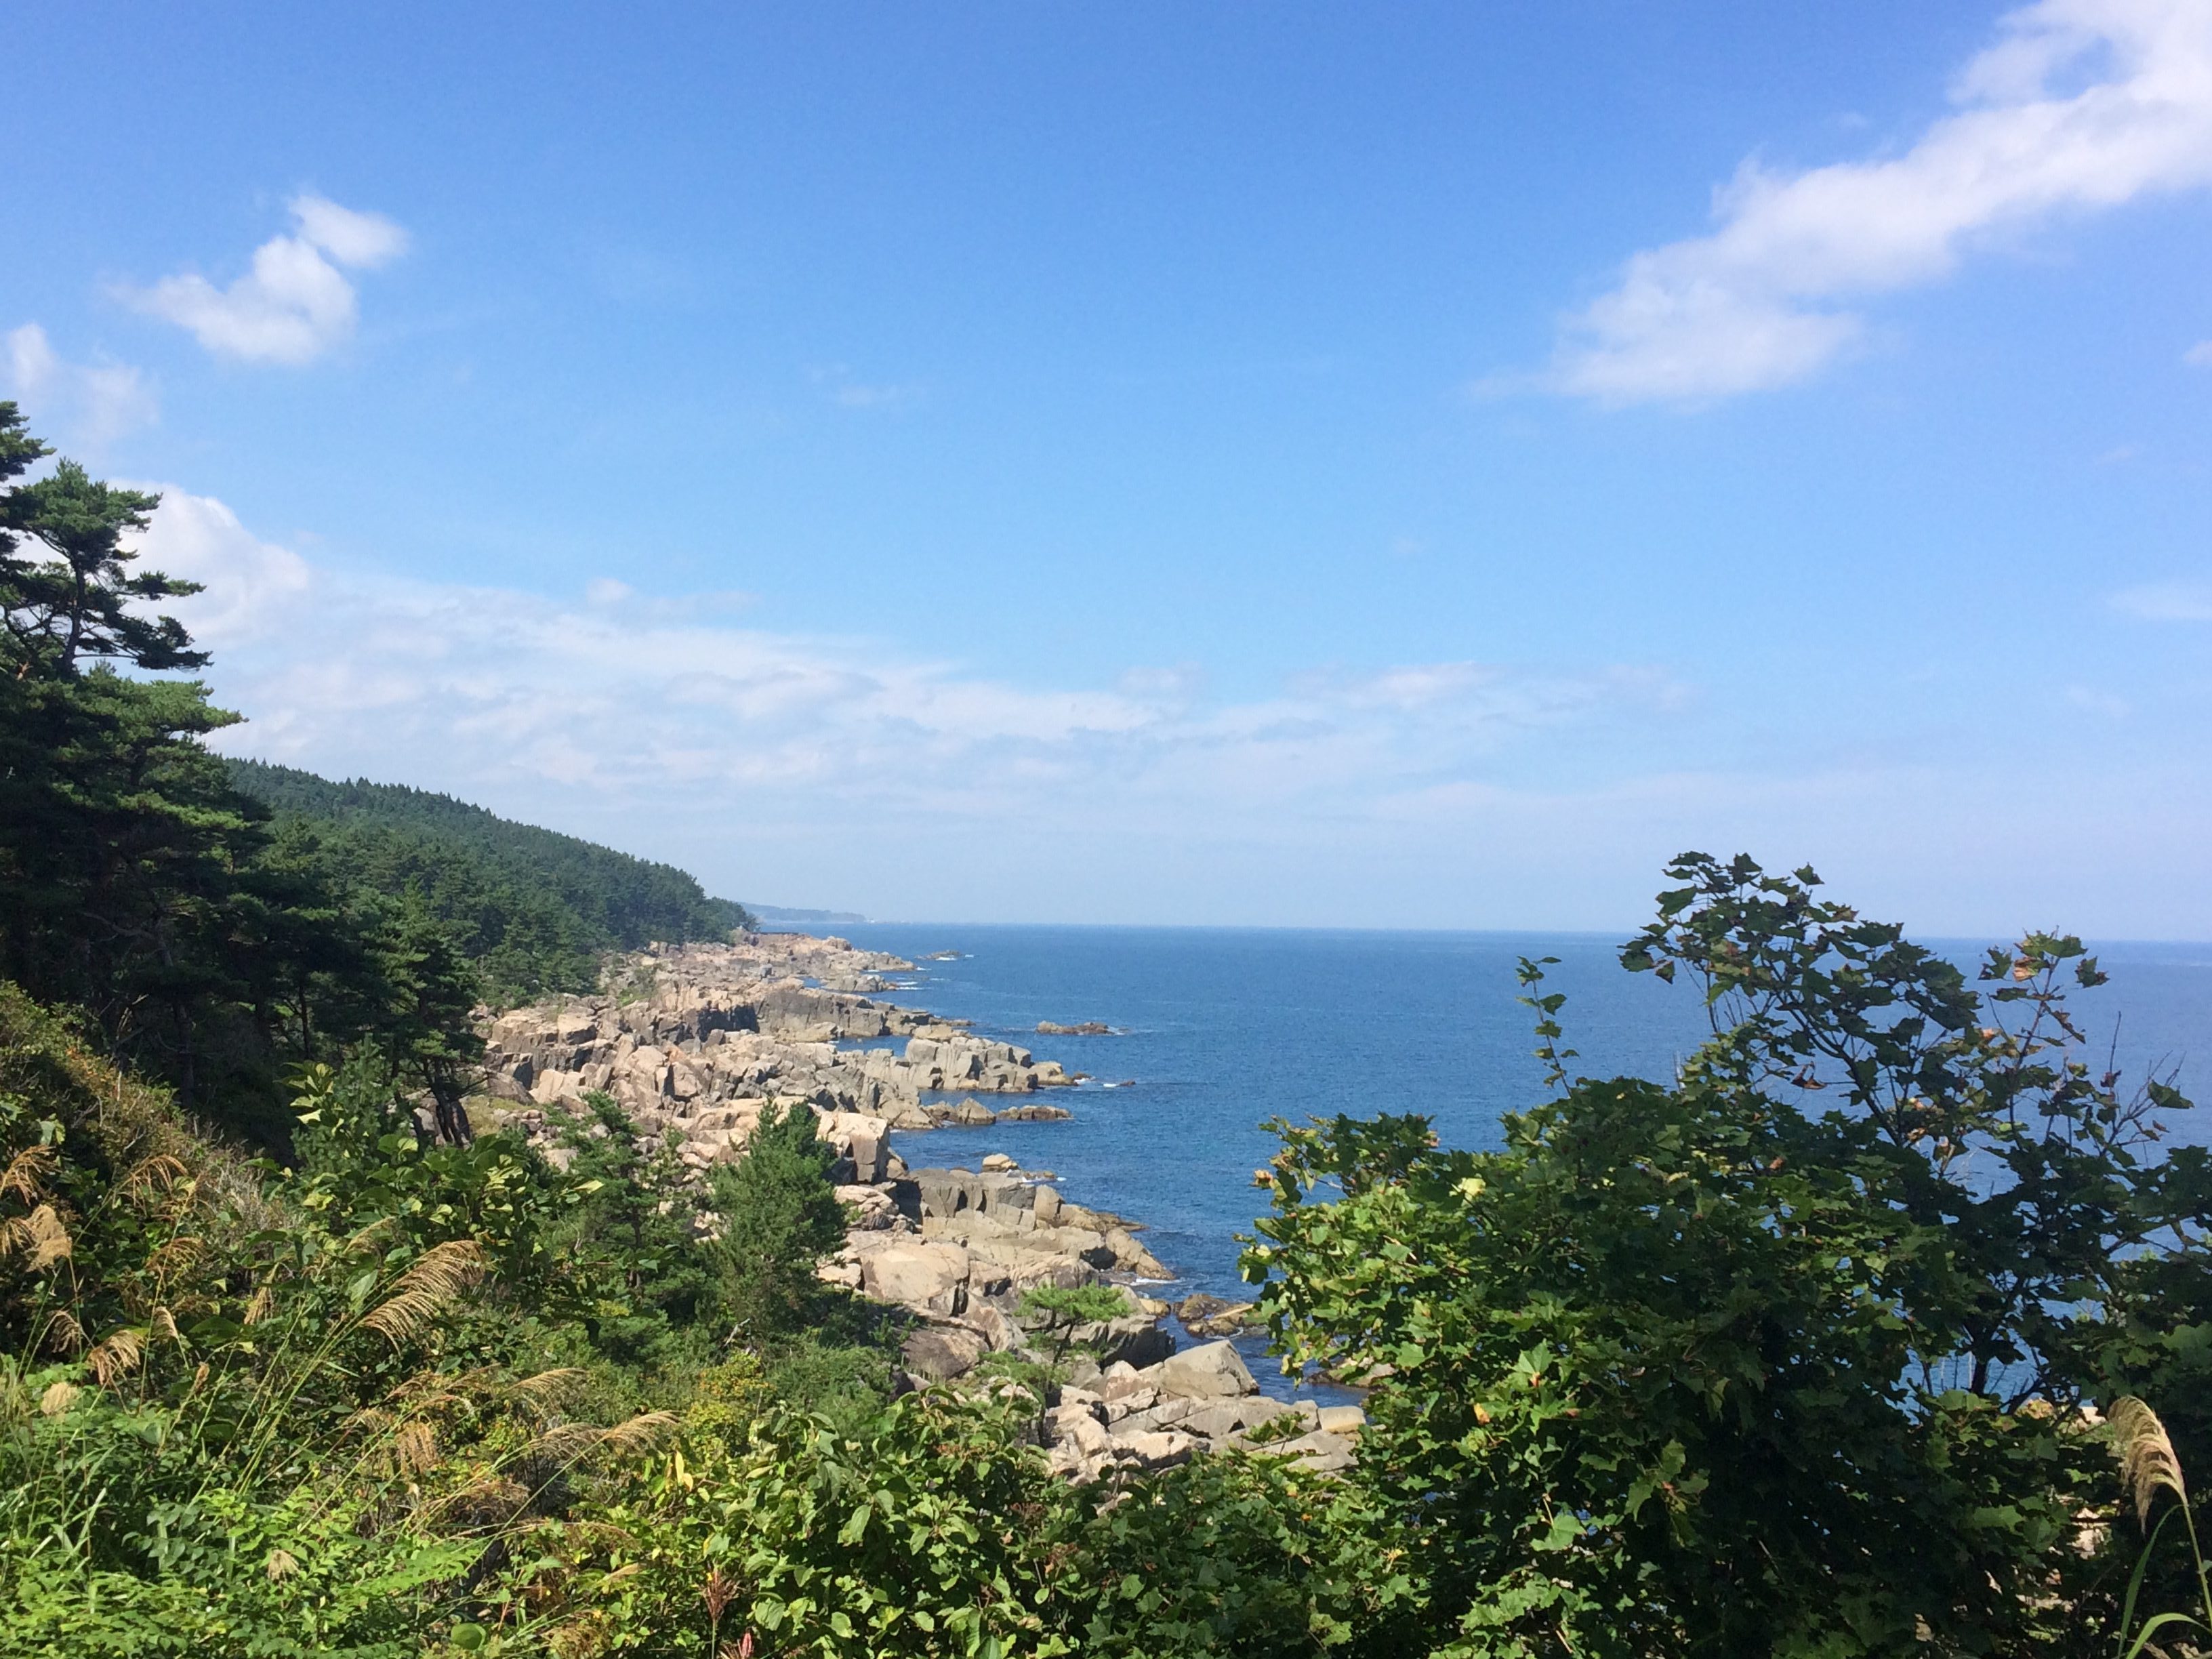 The Michinoku Costal Trail